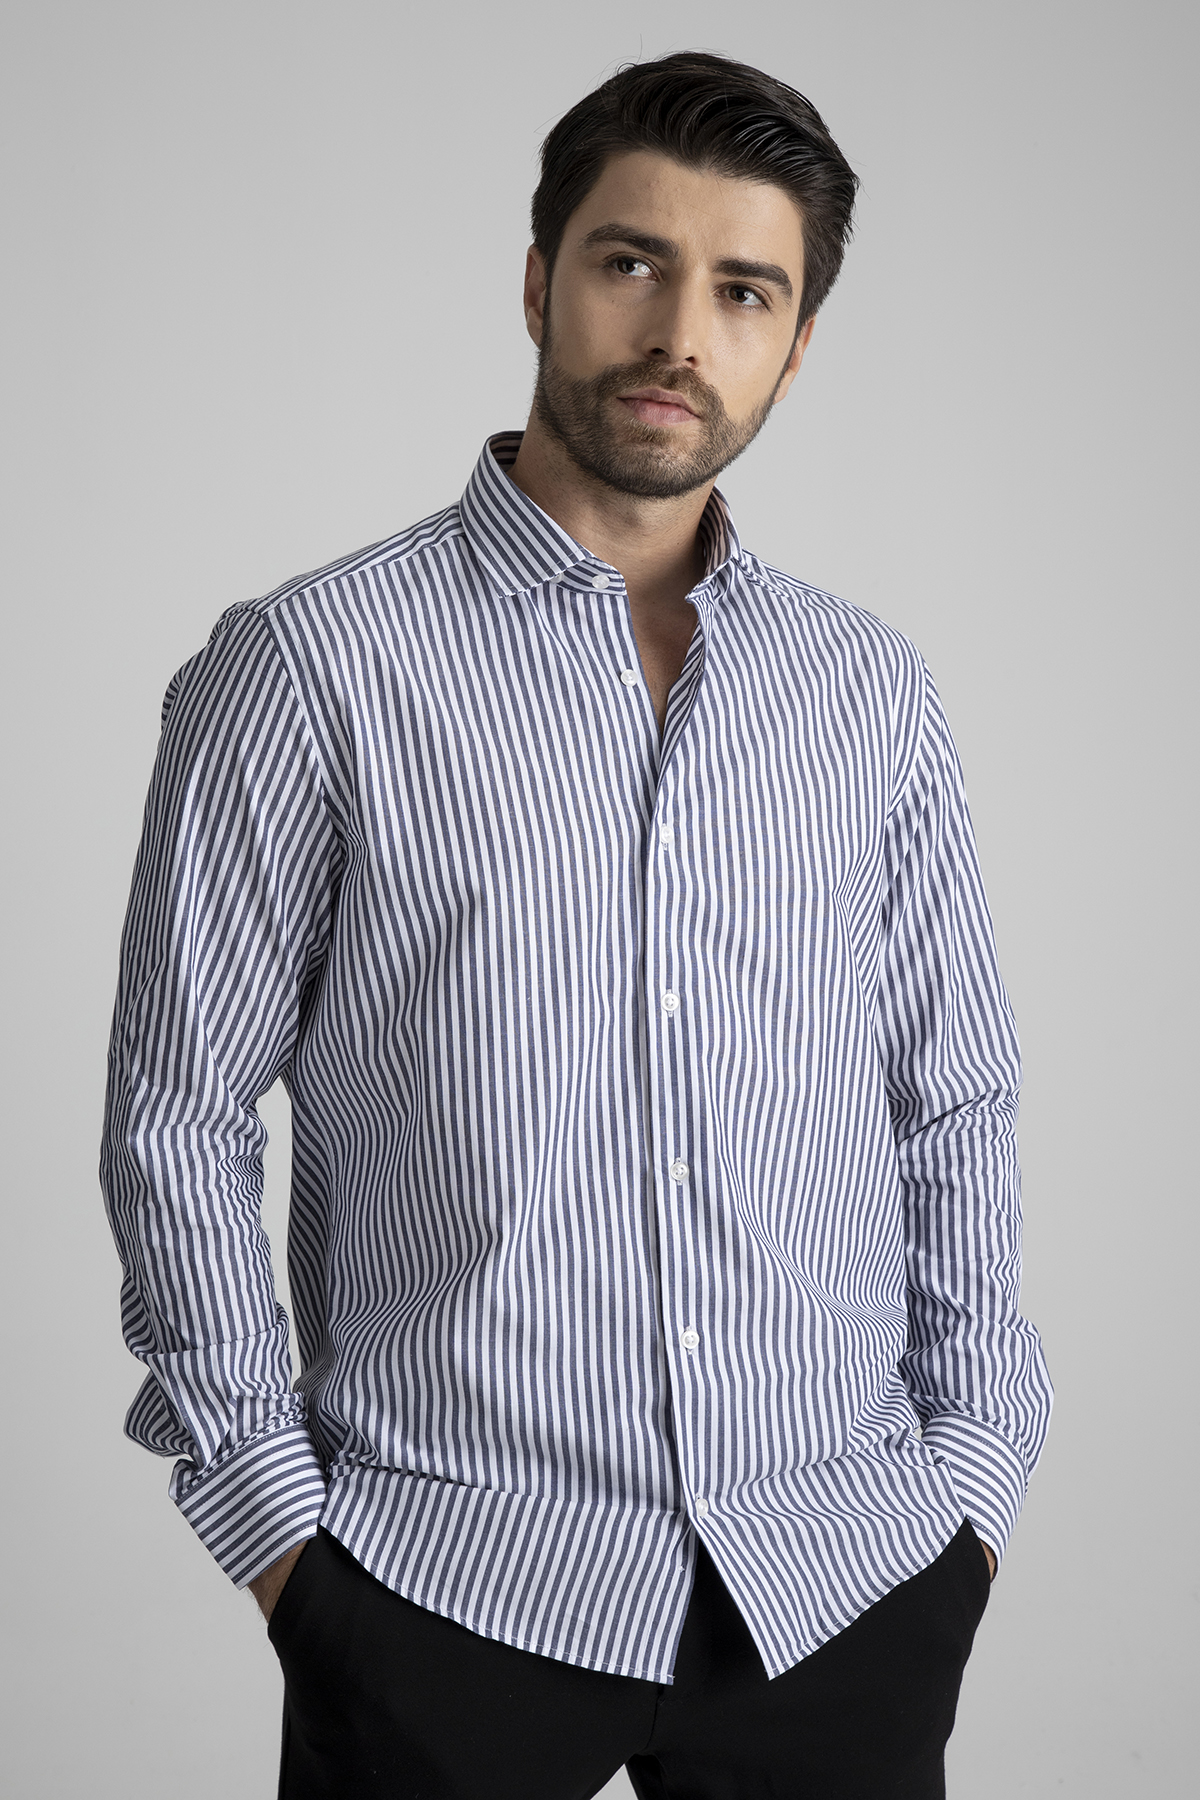 ALENMEZA-Man-Black-and-White-Stripe-Casual-Smart-Stylish-Modern-Fit-Without-a-Pocket-Shirt.jpg